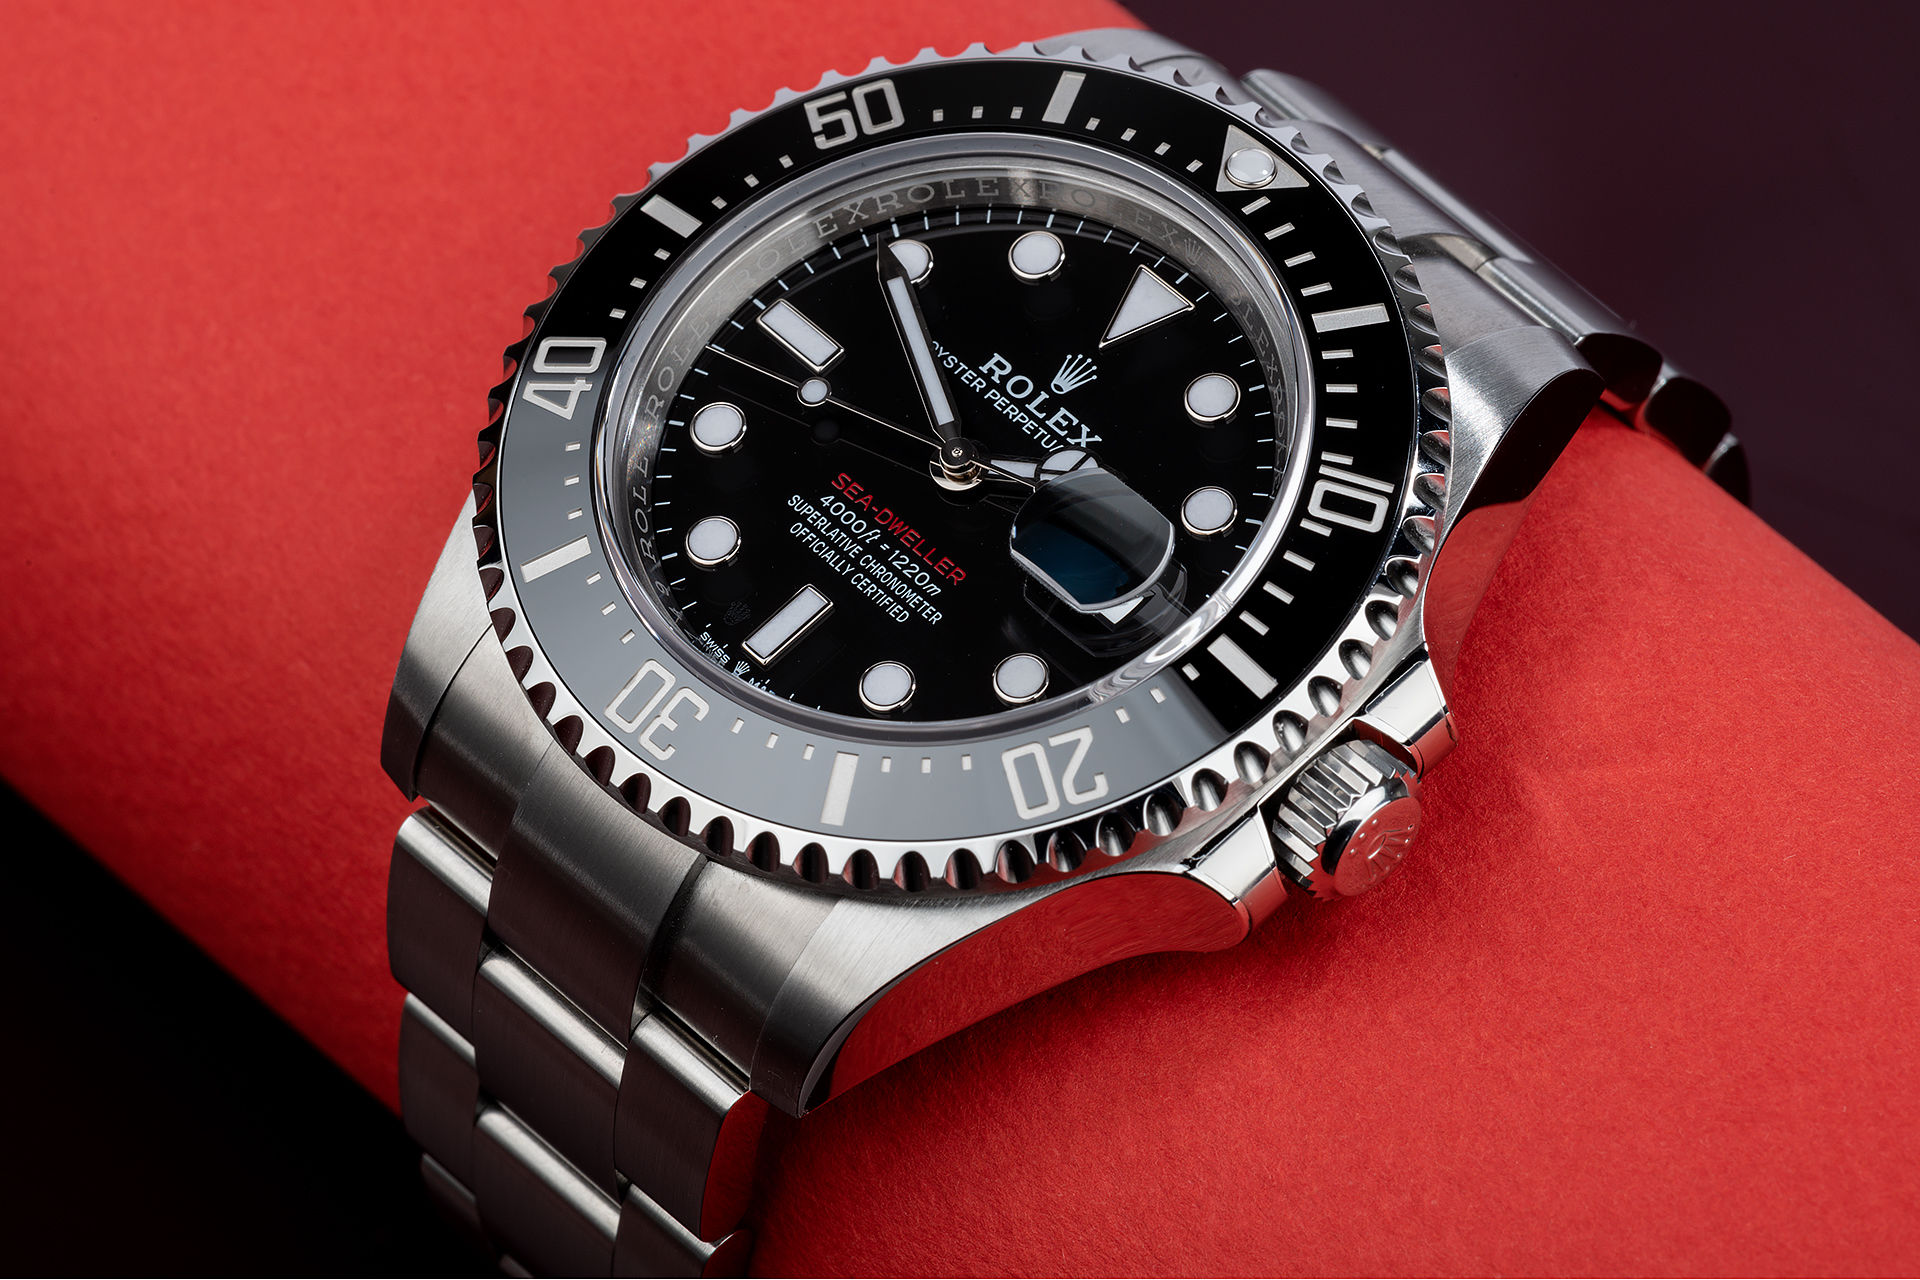 ref 126600 | 'Anniversary Model' | Rolex Sea-Dweller